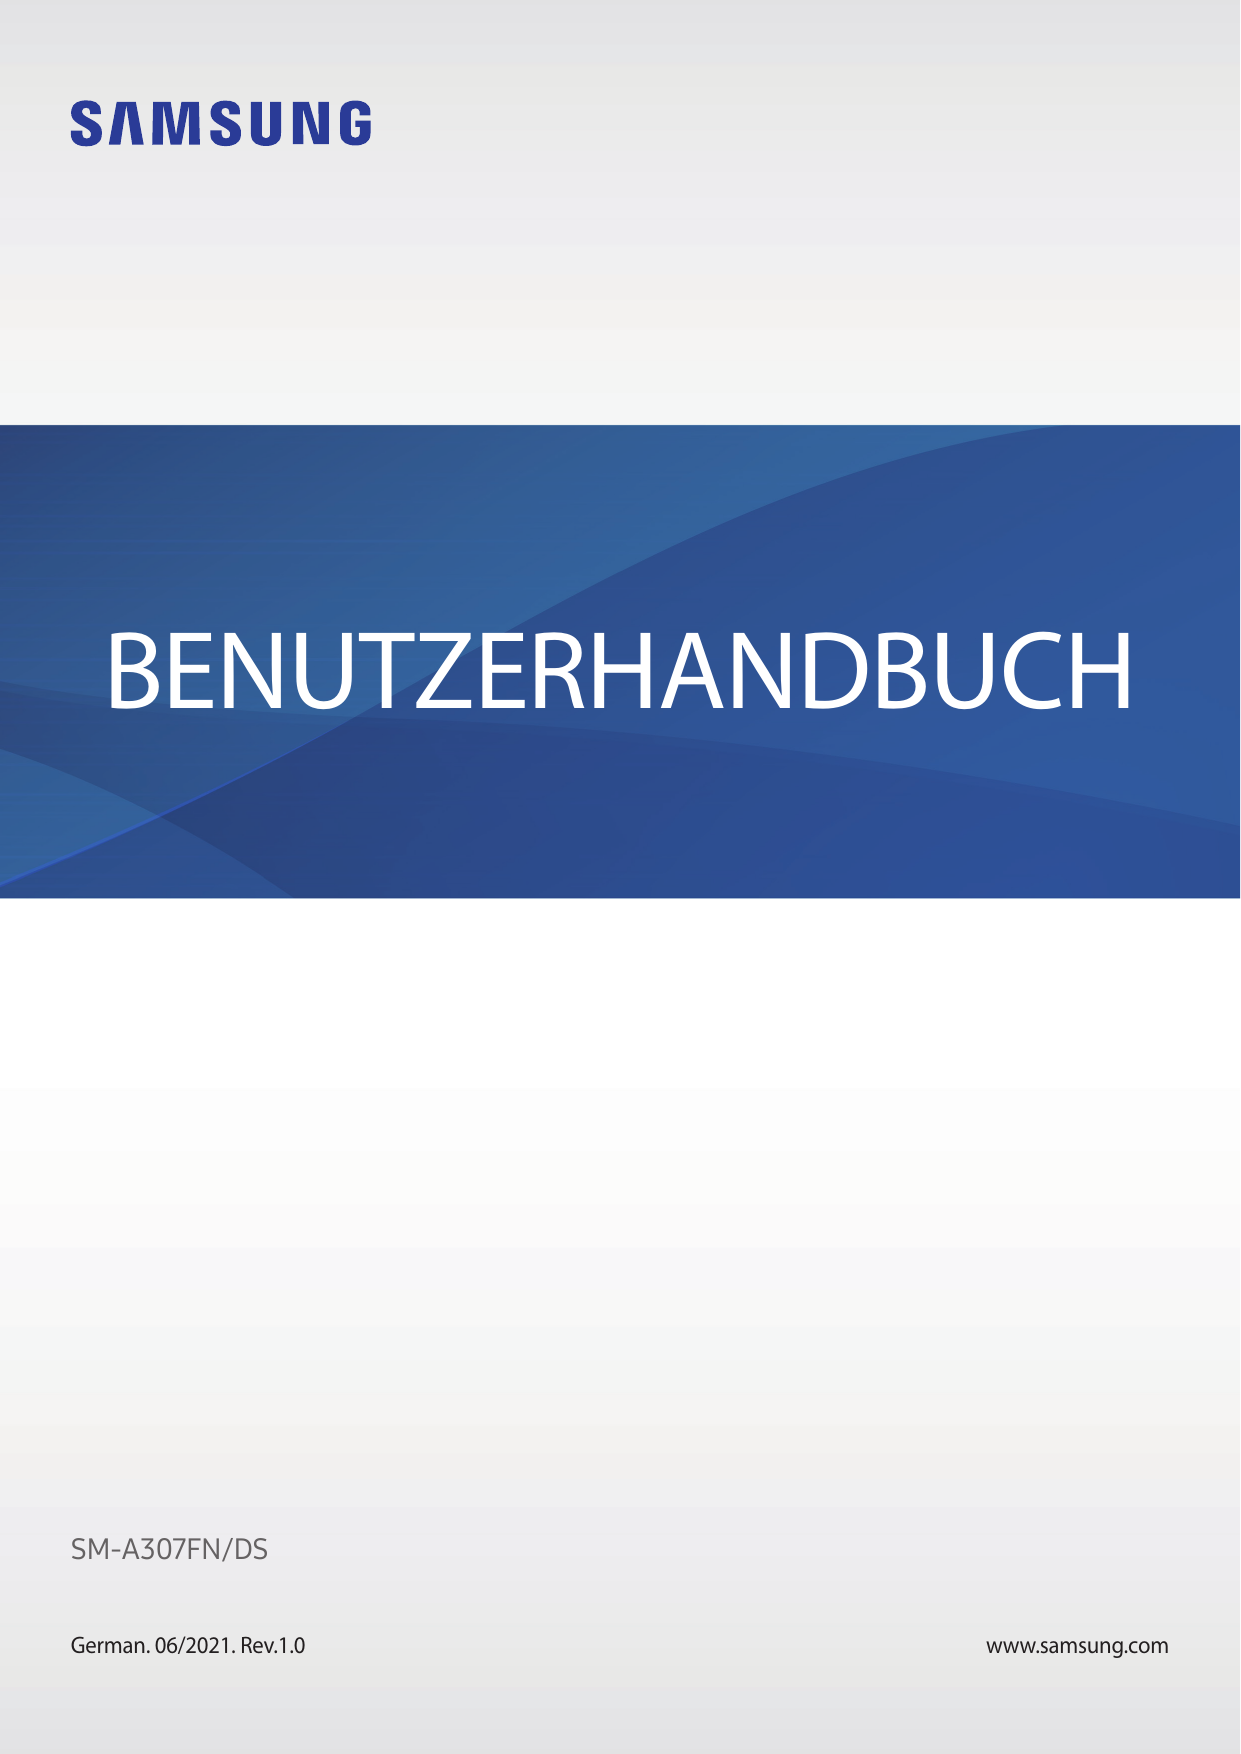 BENUTZERHANDBUCHSM-A307FN/DSGerman. 06/2021. Rev.1.0www.samsung.com